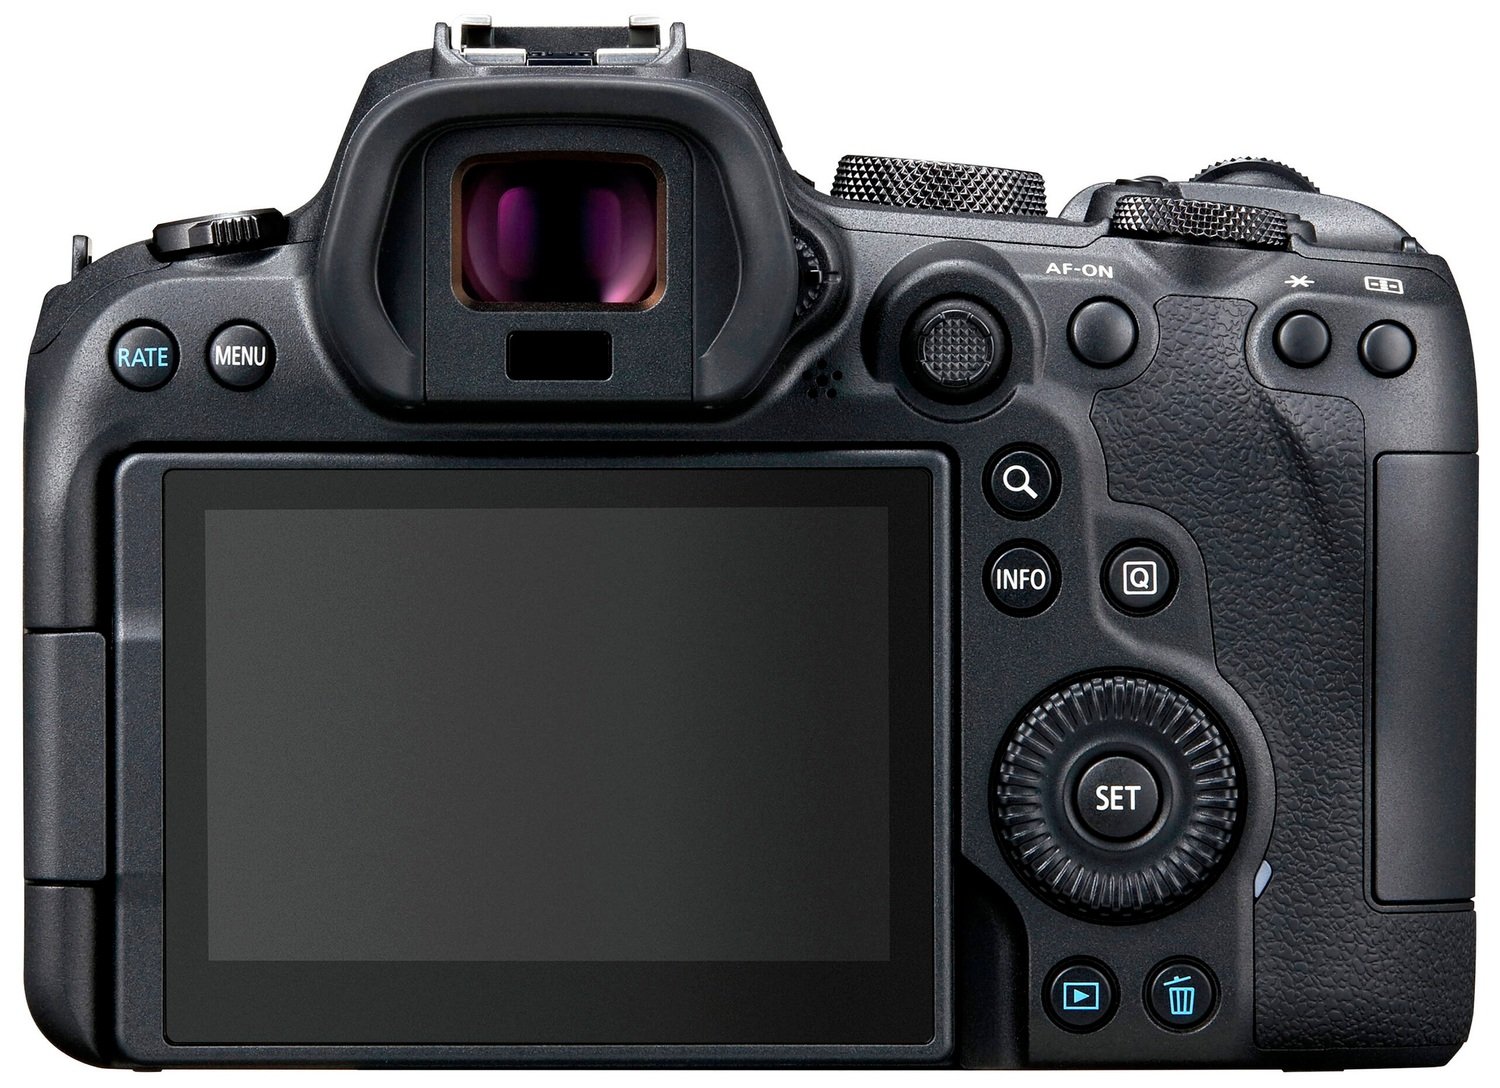 Фотоаппарат Canon EOS R6 Kit RF 24-105mm f/4-7.1 IS STM, черный